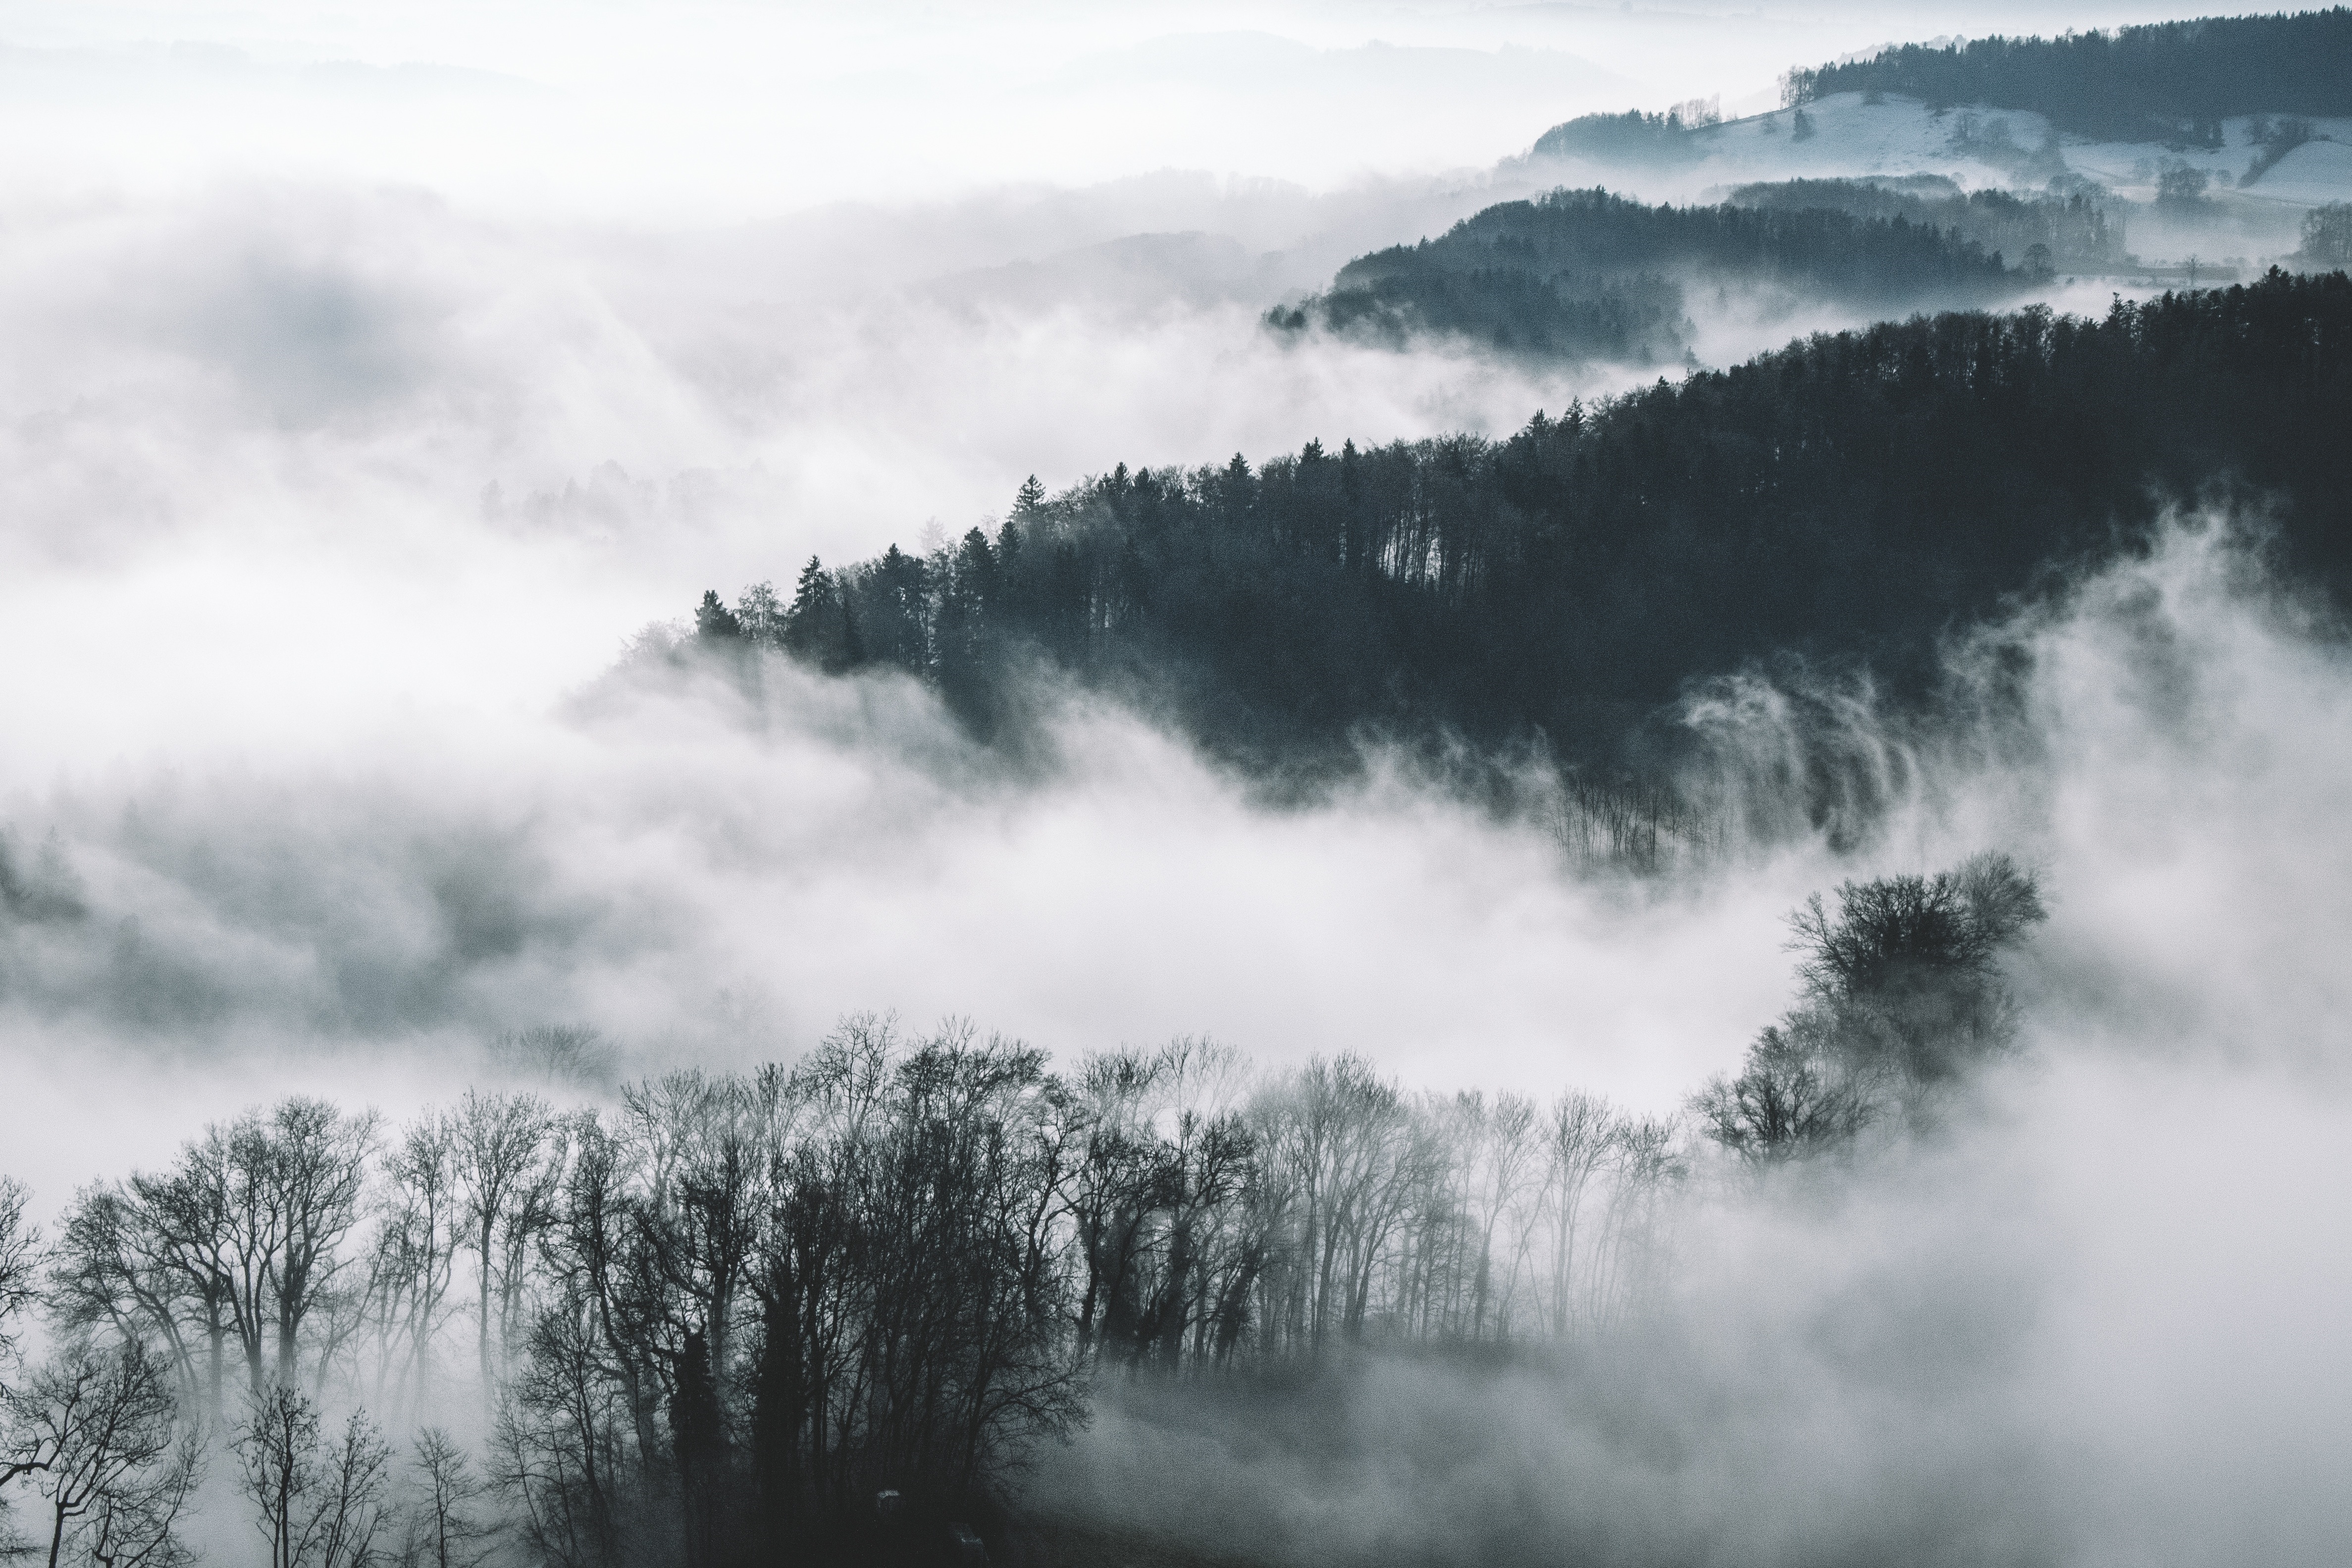 Sea of Fog by Yannick Pulver via Unsplash